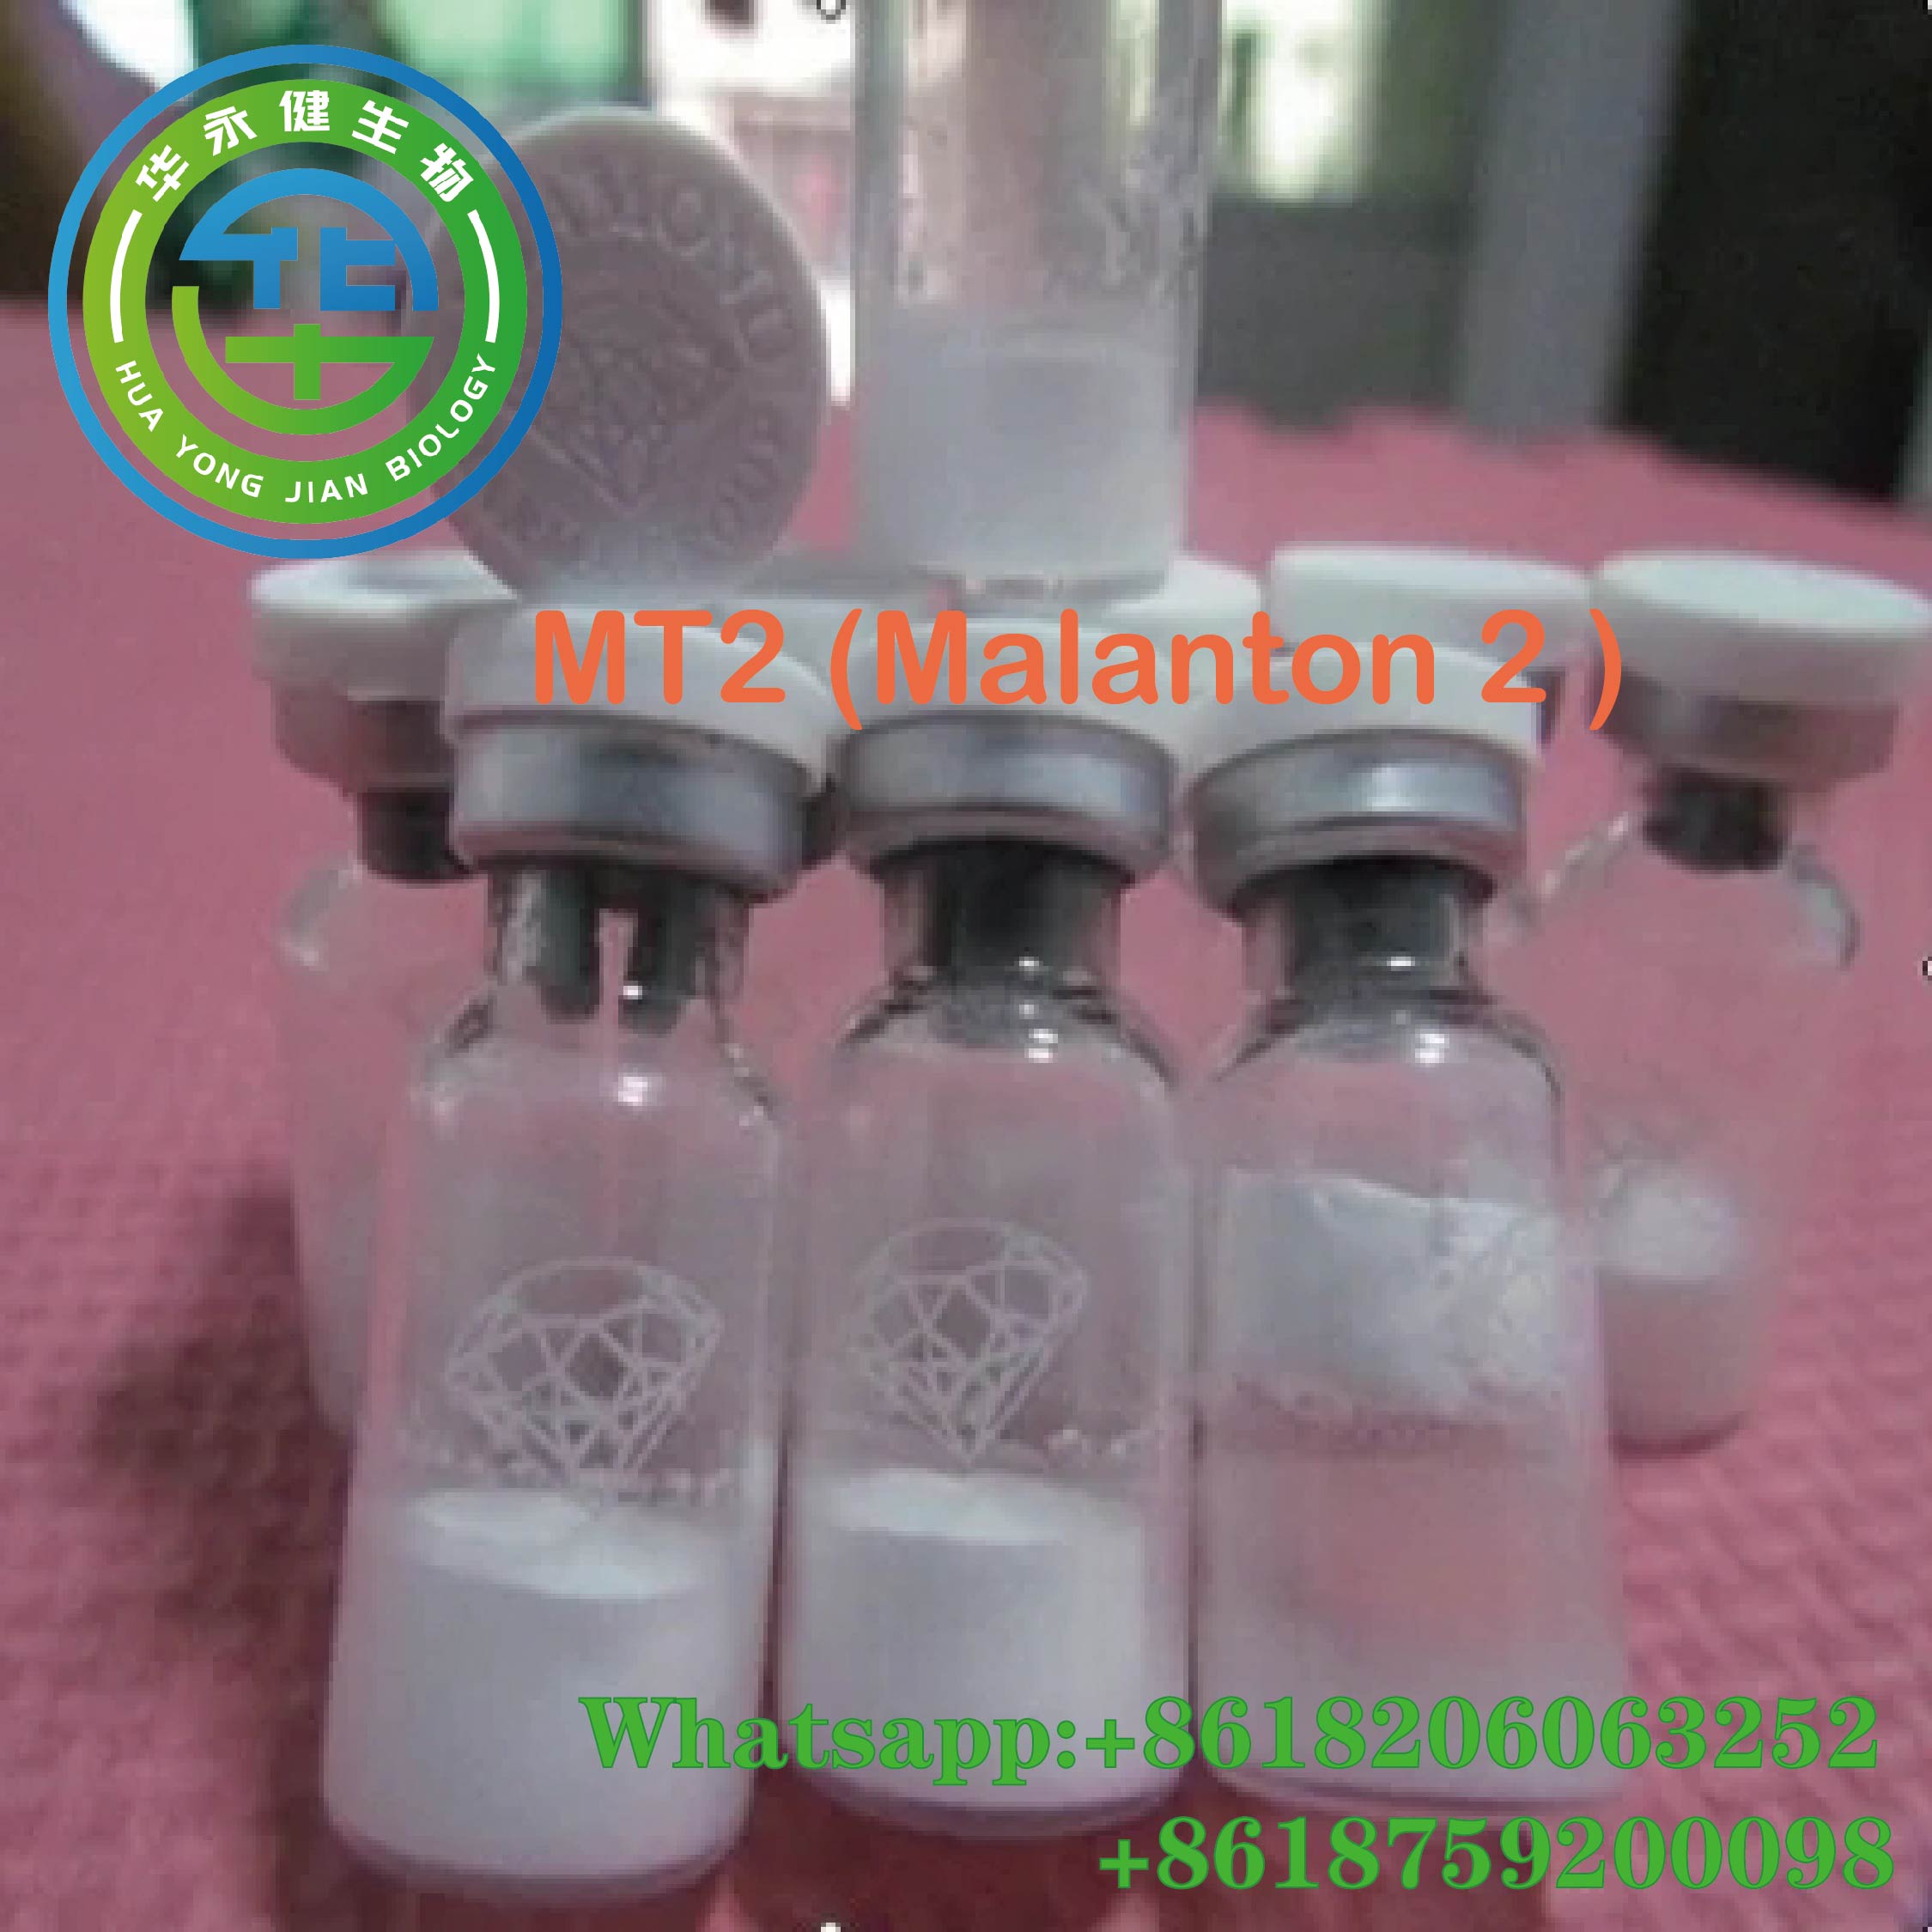 Peptides Steroids Melanotan-2 /Mt-2/Malanton II For SkinTanning CasNO.121062-08-6